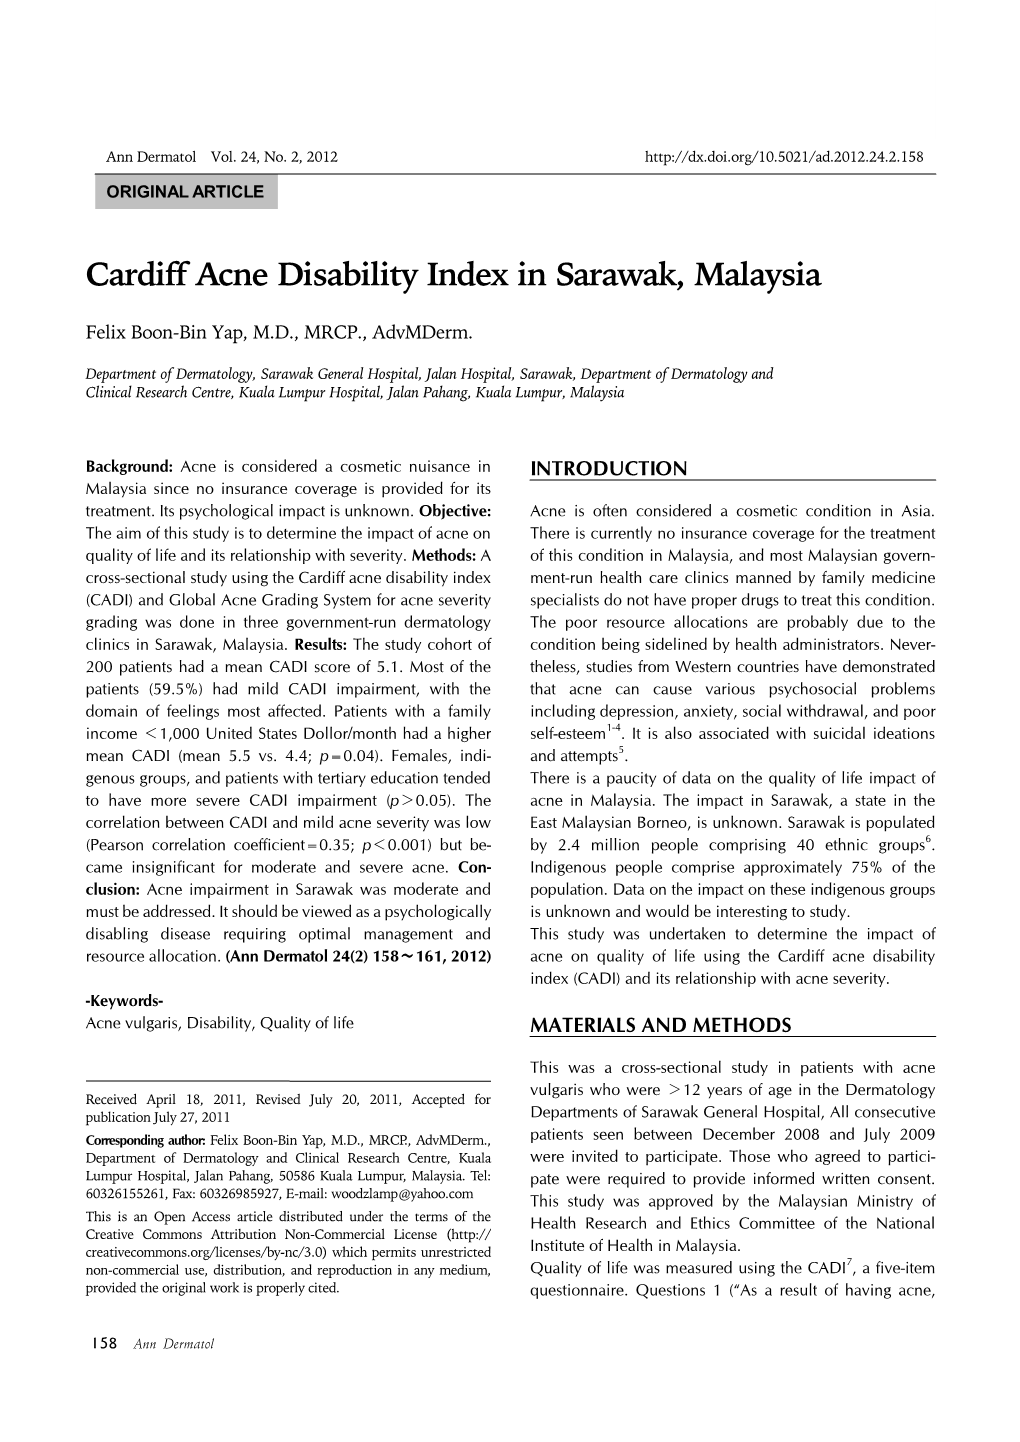 Cardiff Acne Disability Index in Sarawak, Malaysia